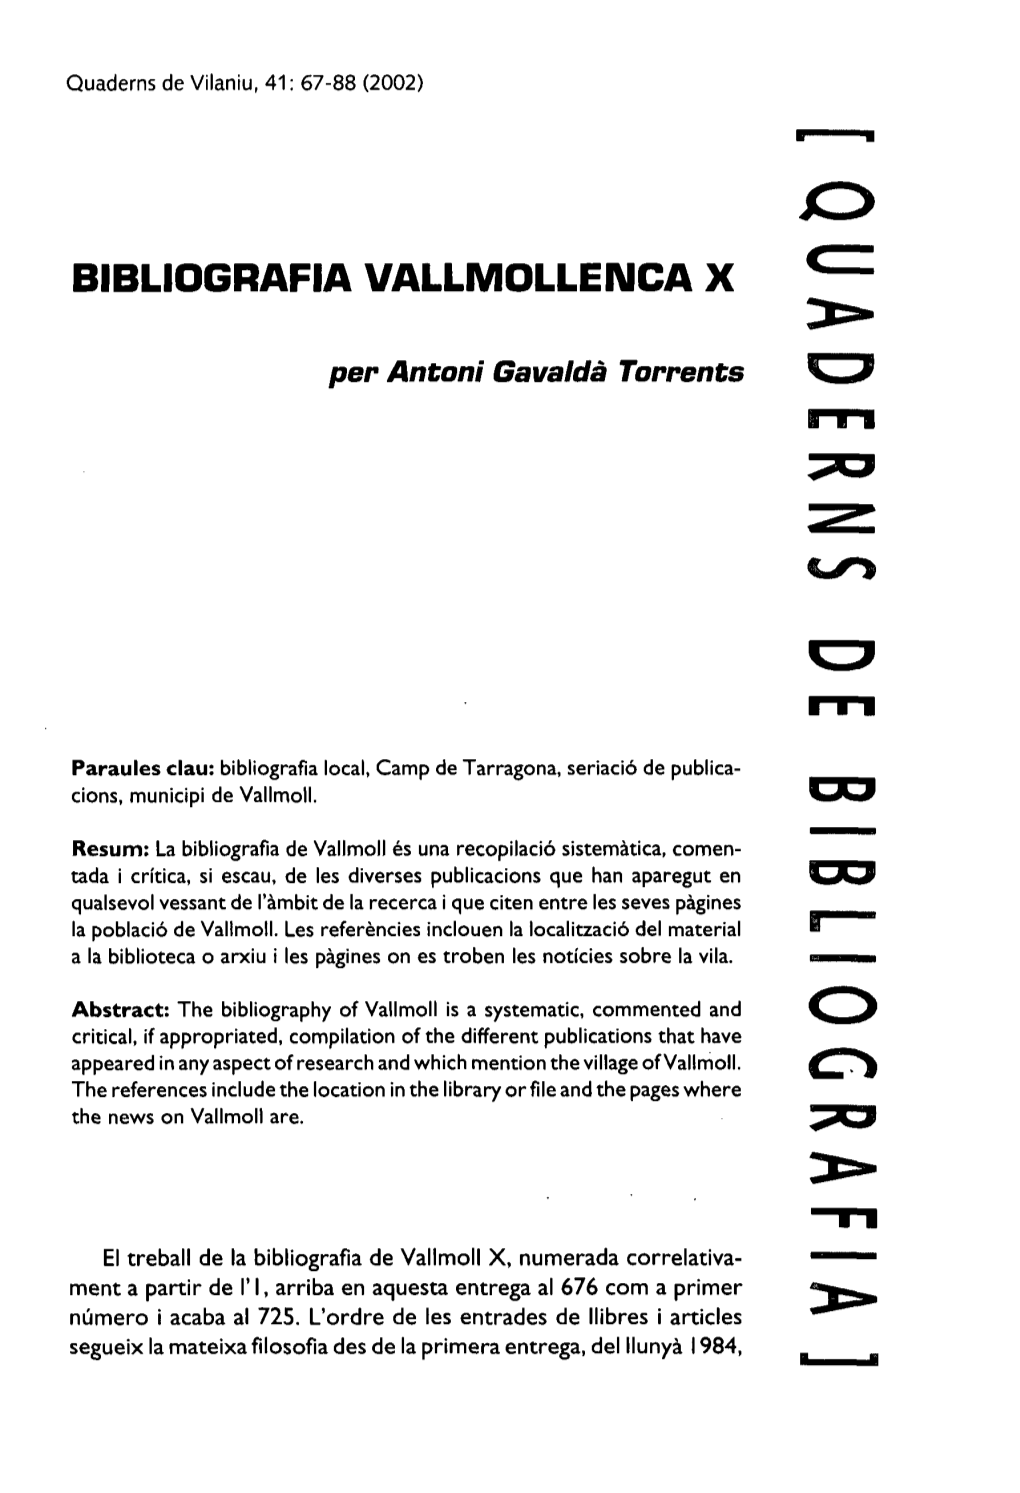 Bibliografia Vallmolleimca X